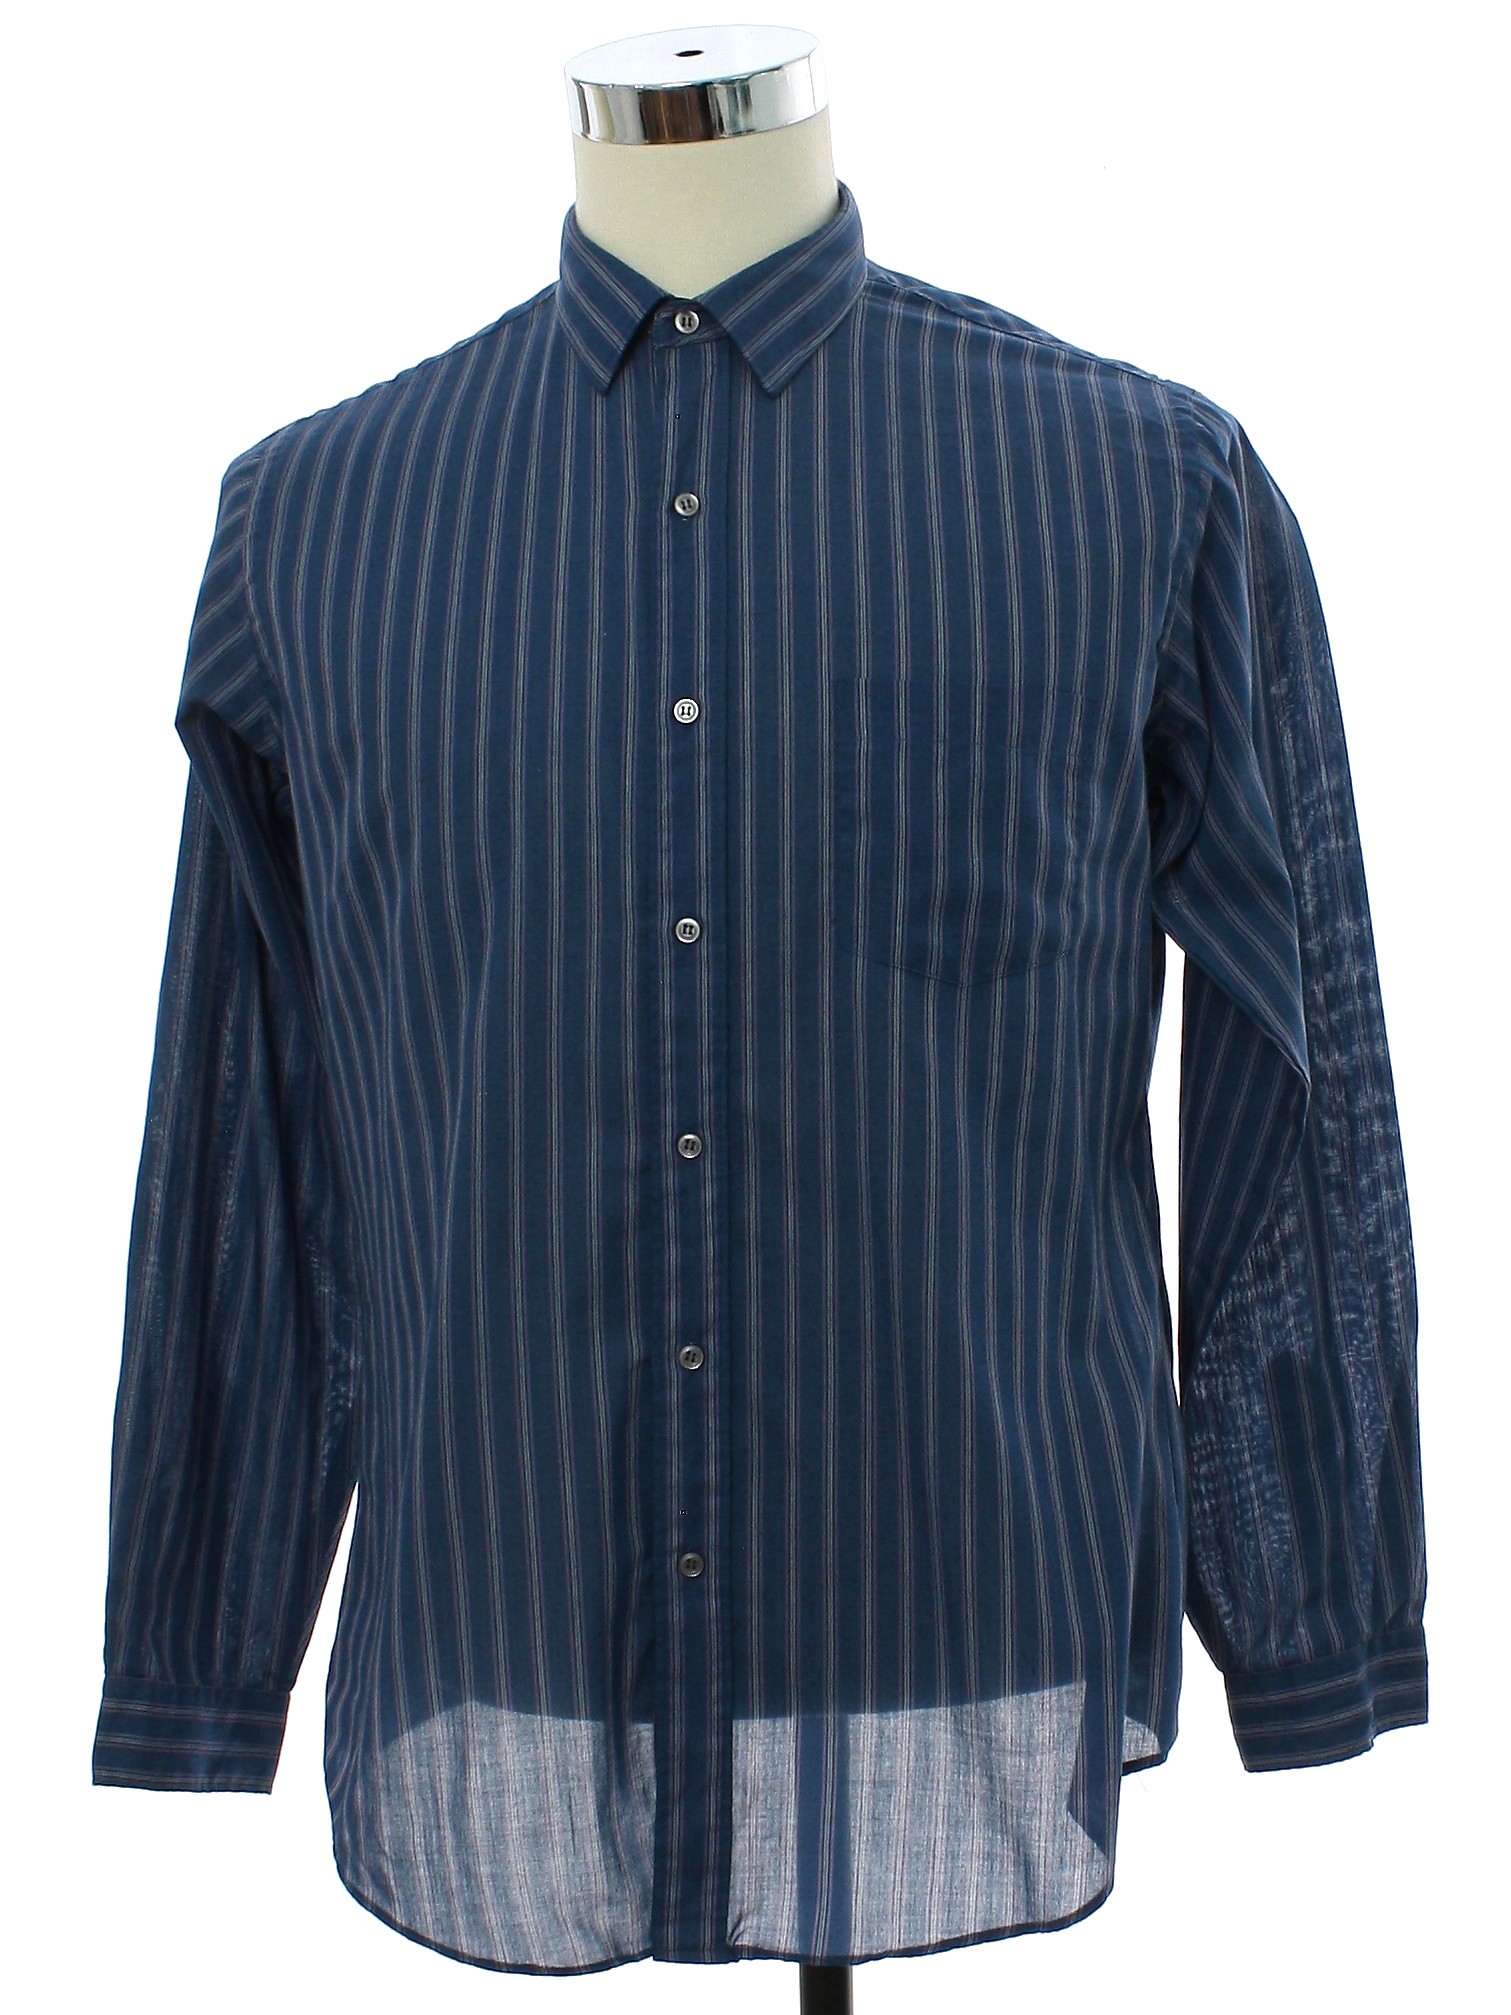 Levis 1980s Vintage Shirt: Late 80s -Levis- Mens navy blue striped ...